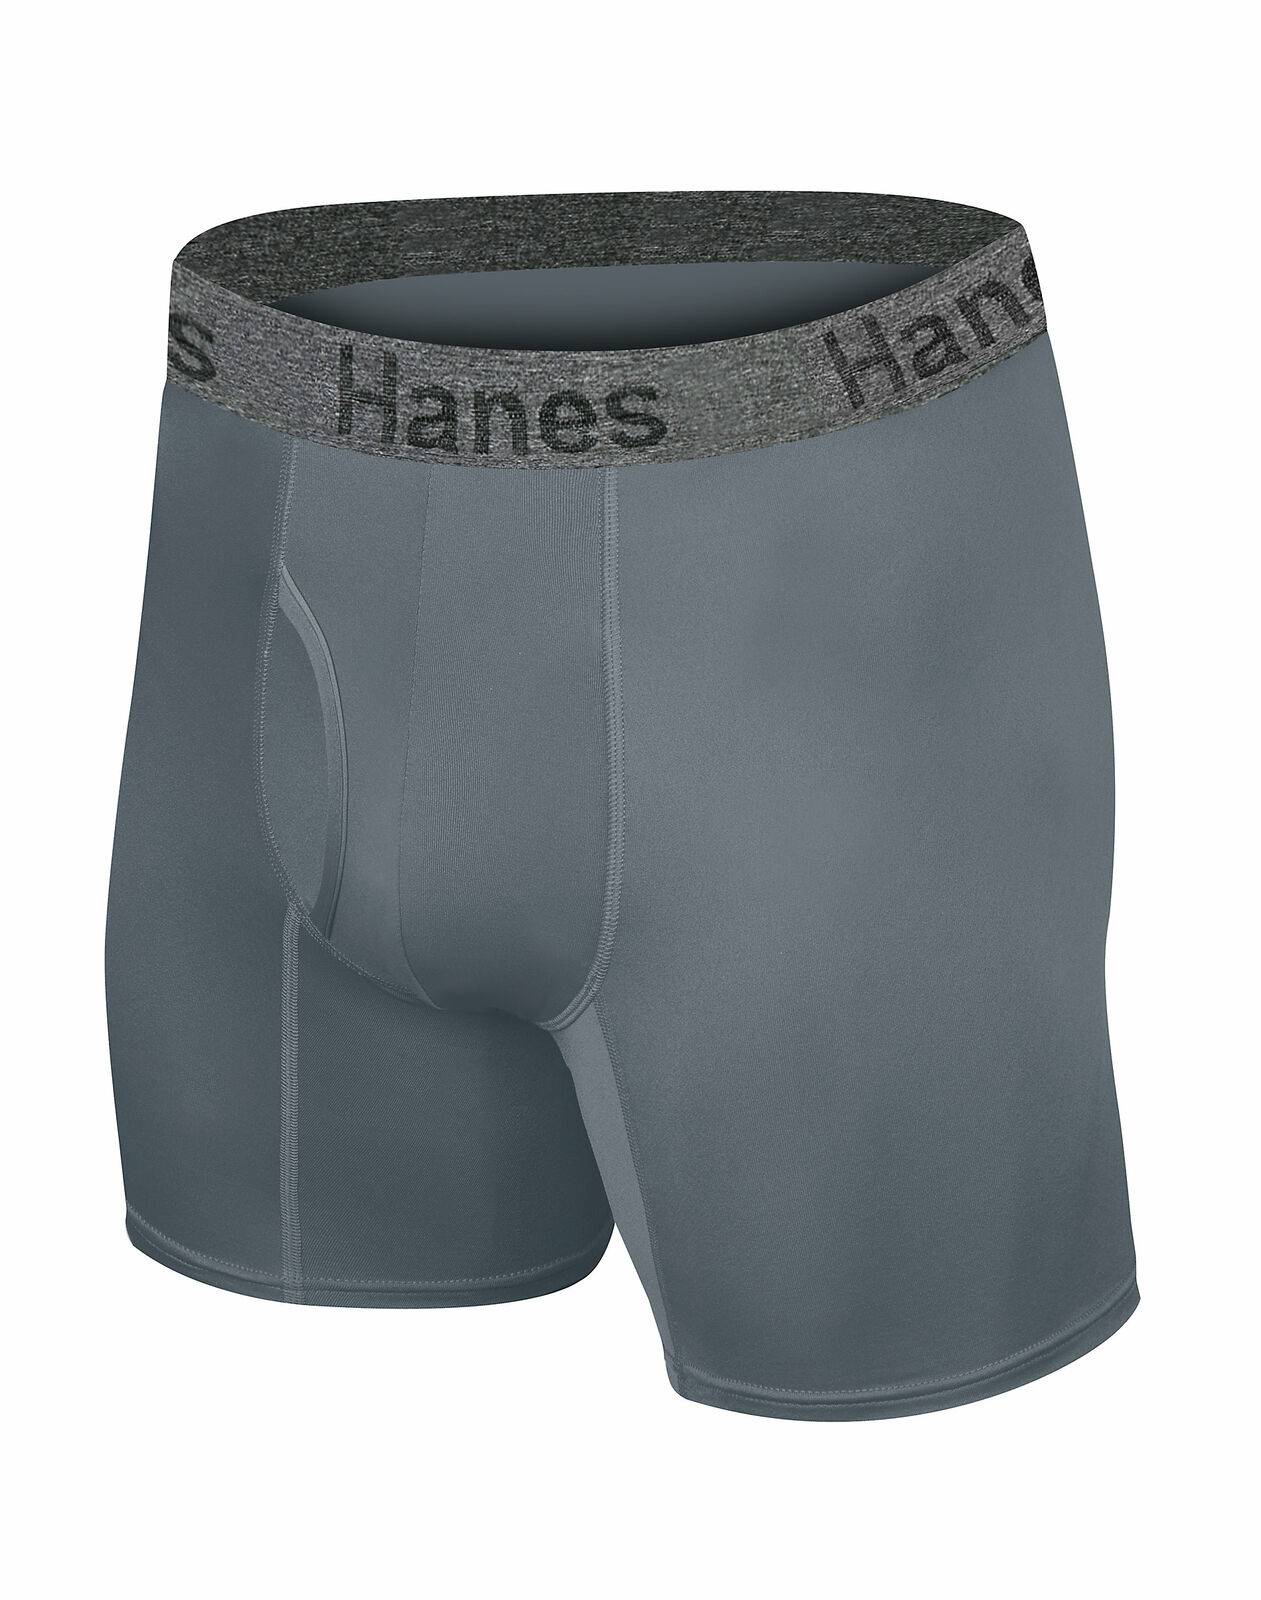 Hanes Men's 10-Pack Boxer Briefs ComfortFlex Waistband Soft